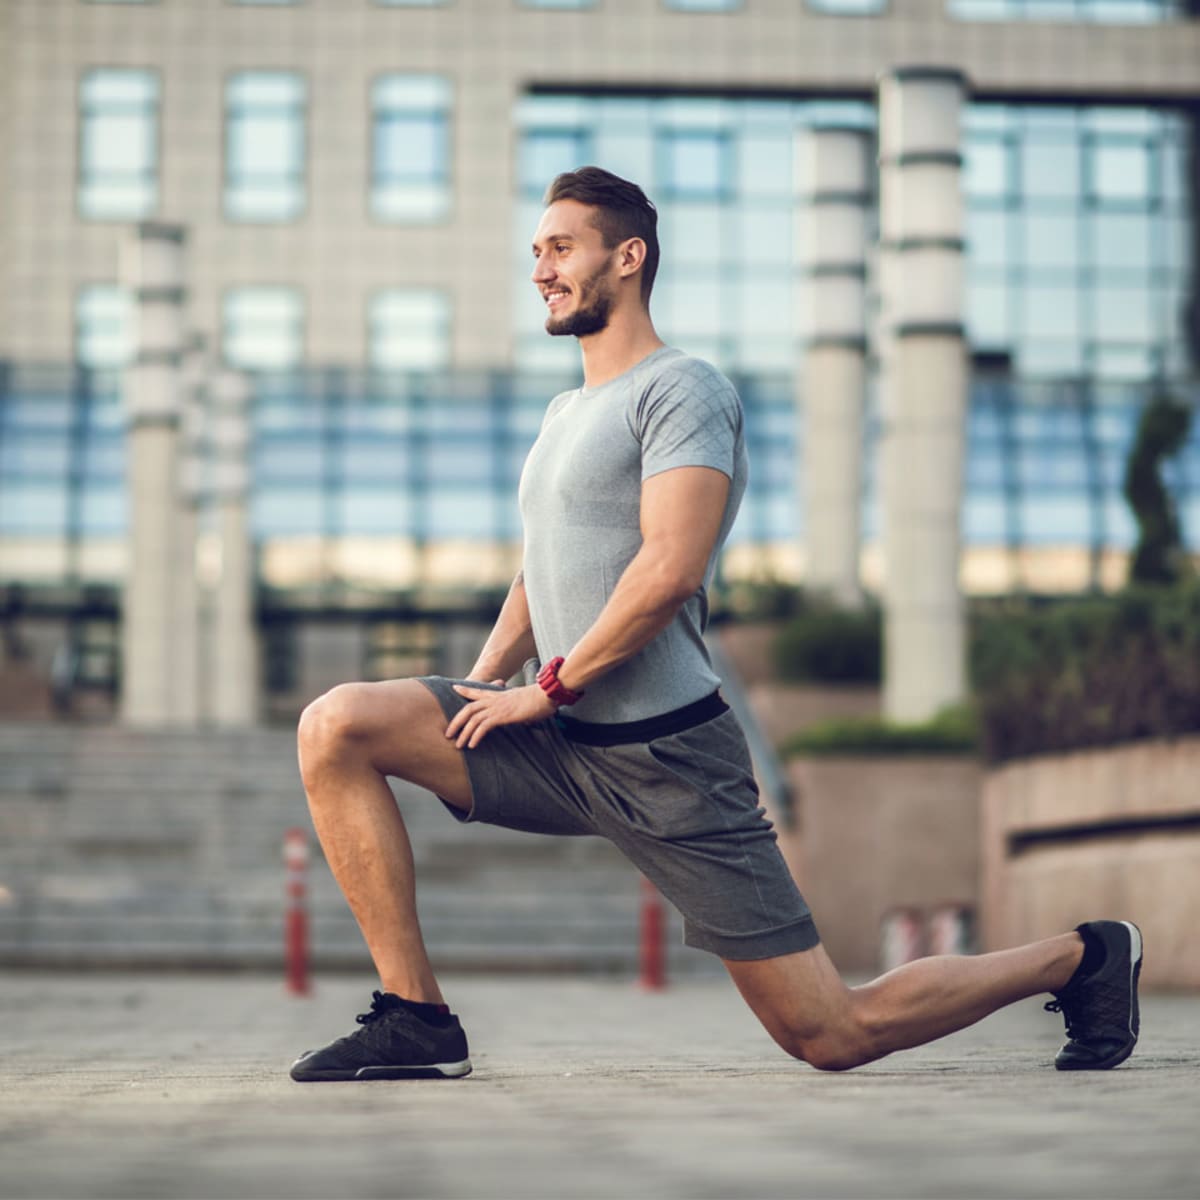 Get Long, Lean Legs!  Lean leg workout, Fitness body, Lower body workout